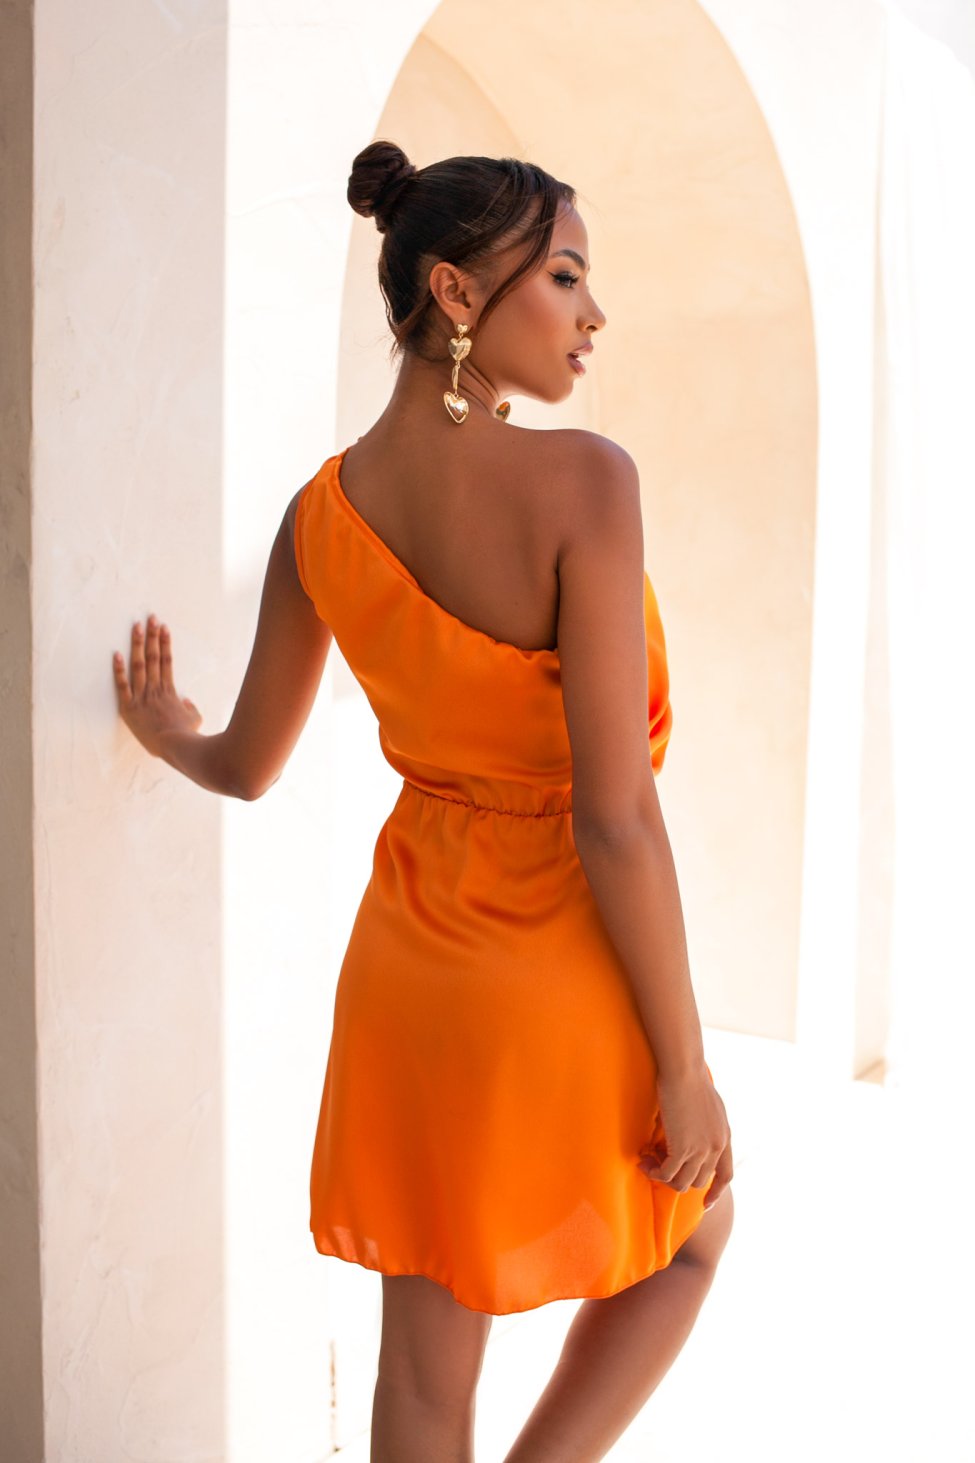 Hazelnut μίνι φόρεμα με έναν ώμο με όψη σατέν πορτοκαλί